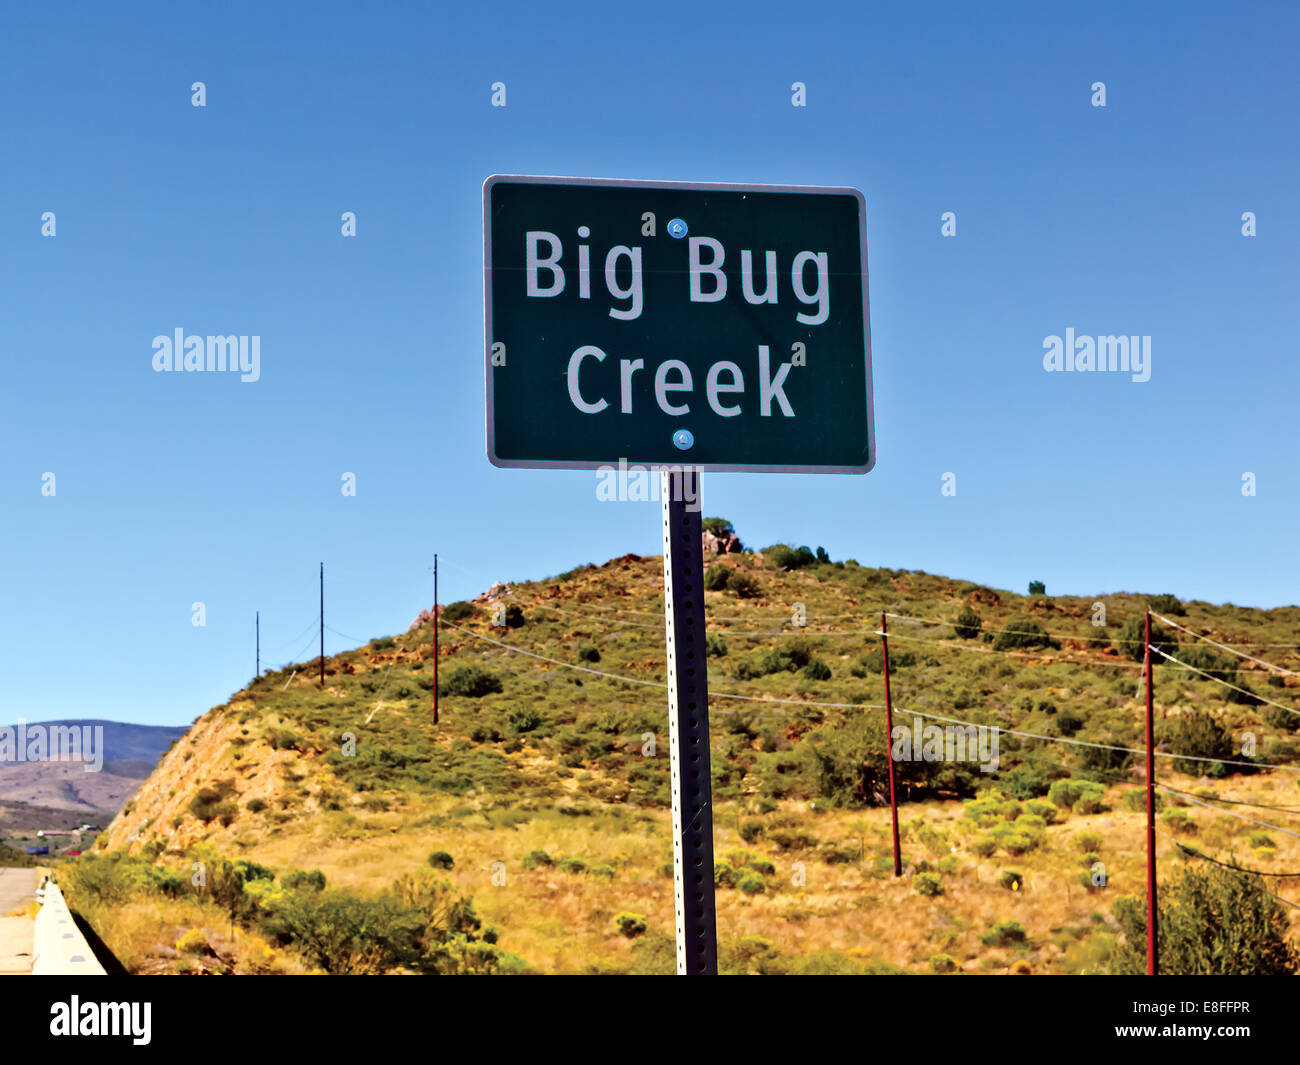 USA, Arizona, Yavapai County, Cordes Junction, Landscape with Big Bug Creek sign Stock Photo